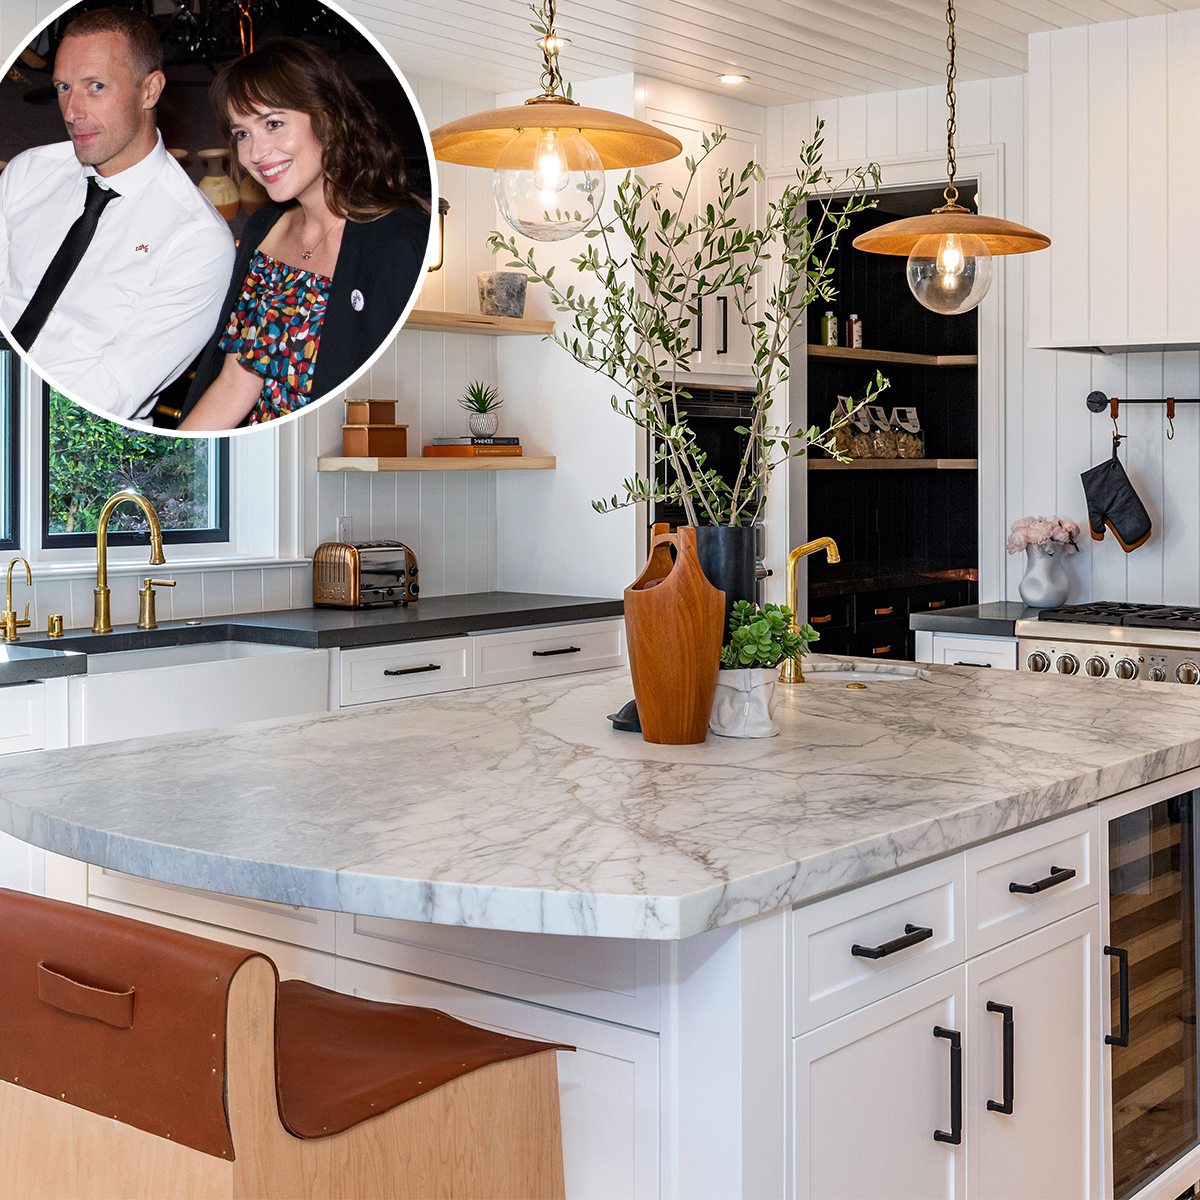 Discover Chris Martin and Dakota Johnson’s $ 12.5 million Malibu home